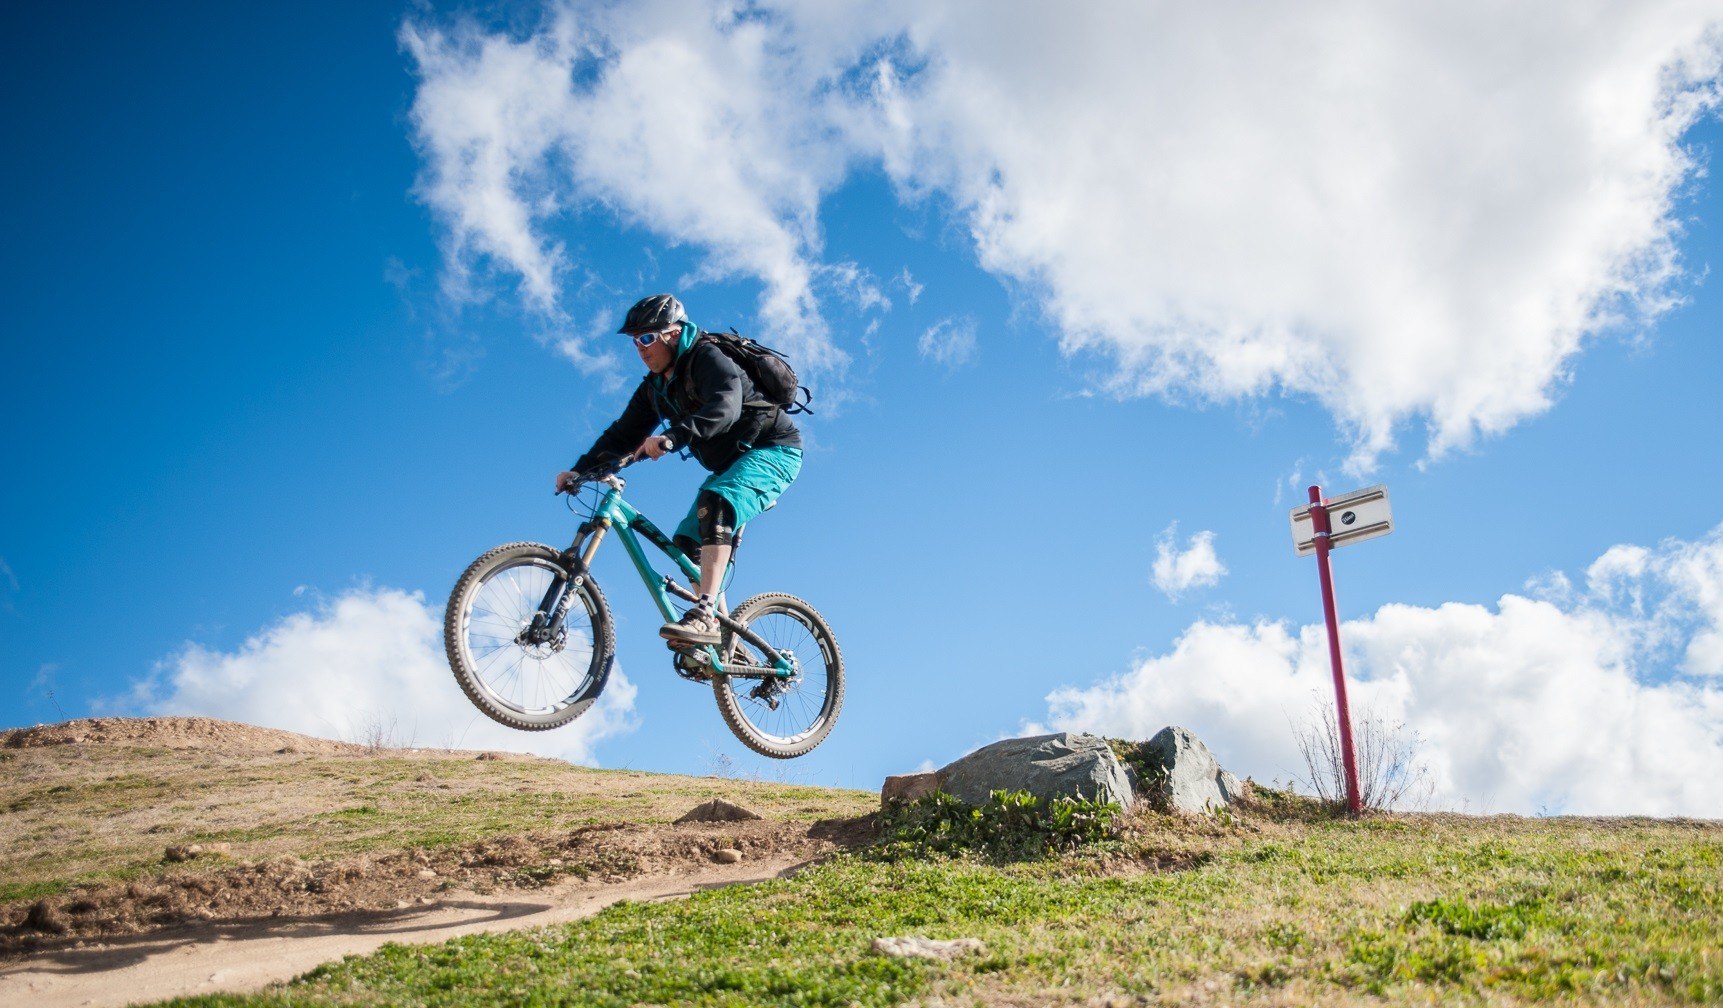 extreme sports demystified - mountain biking